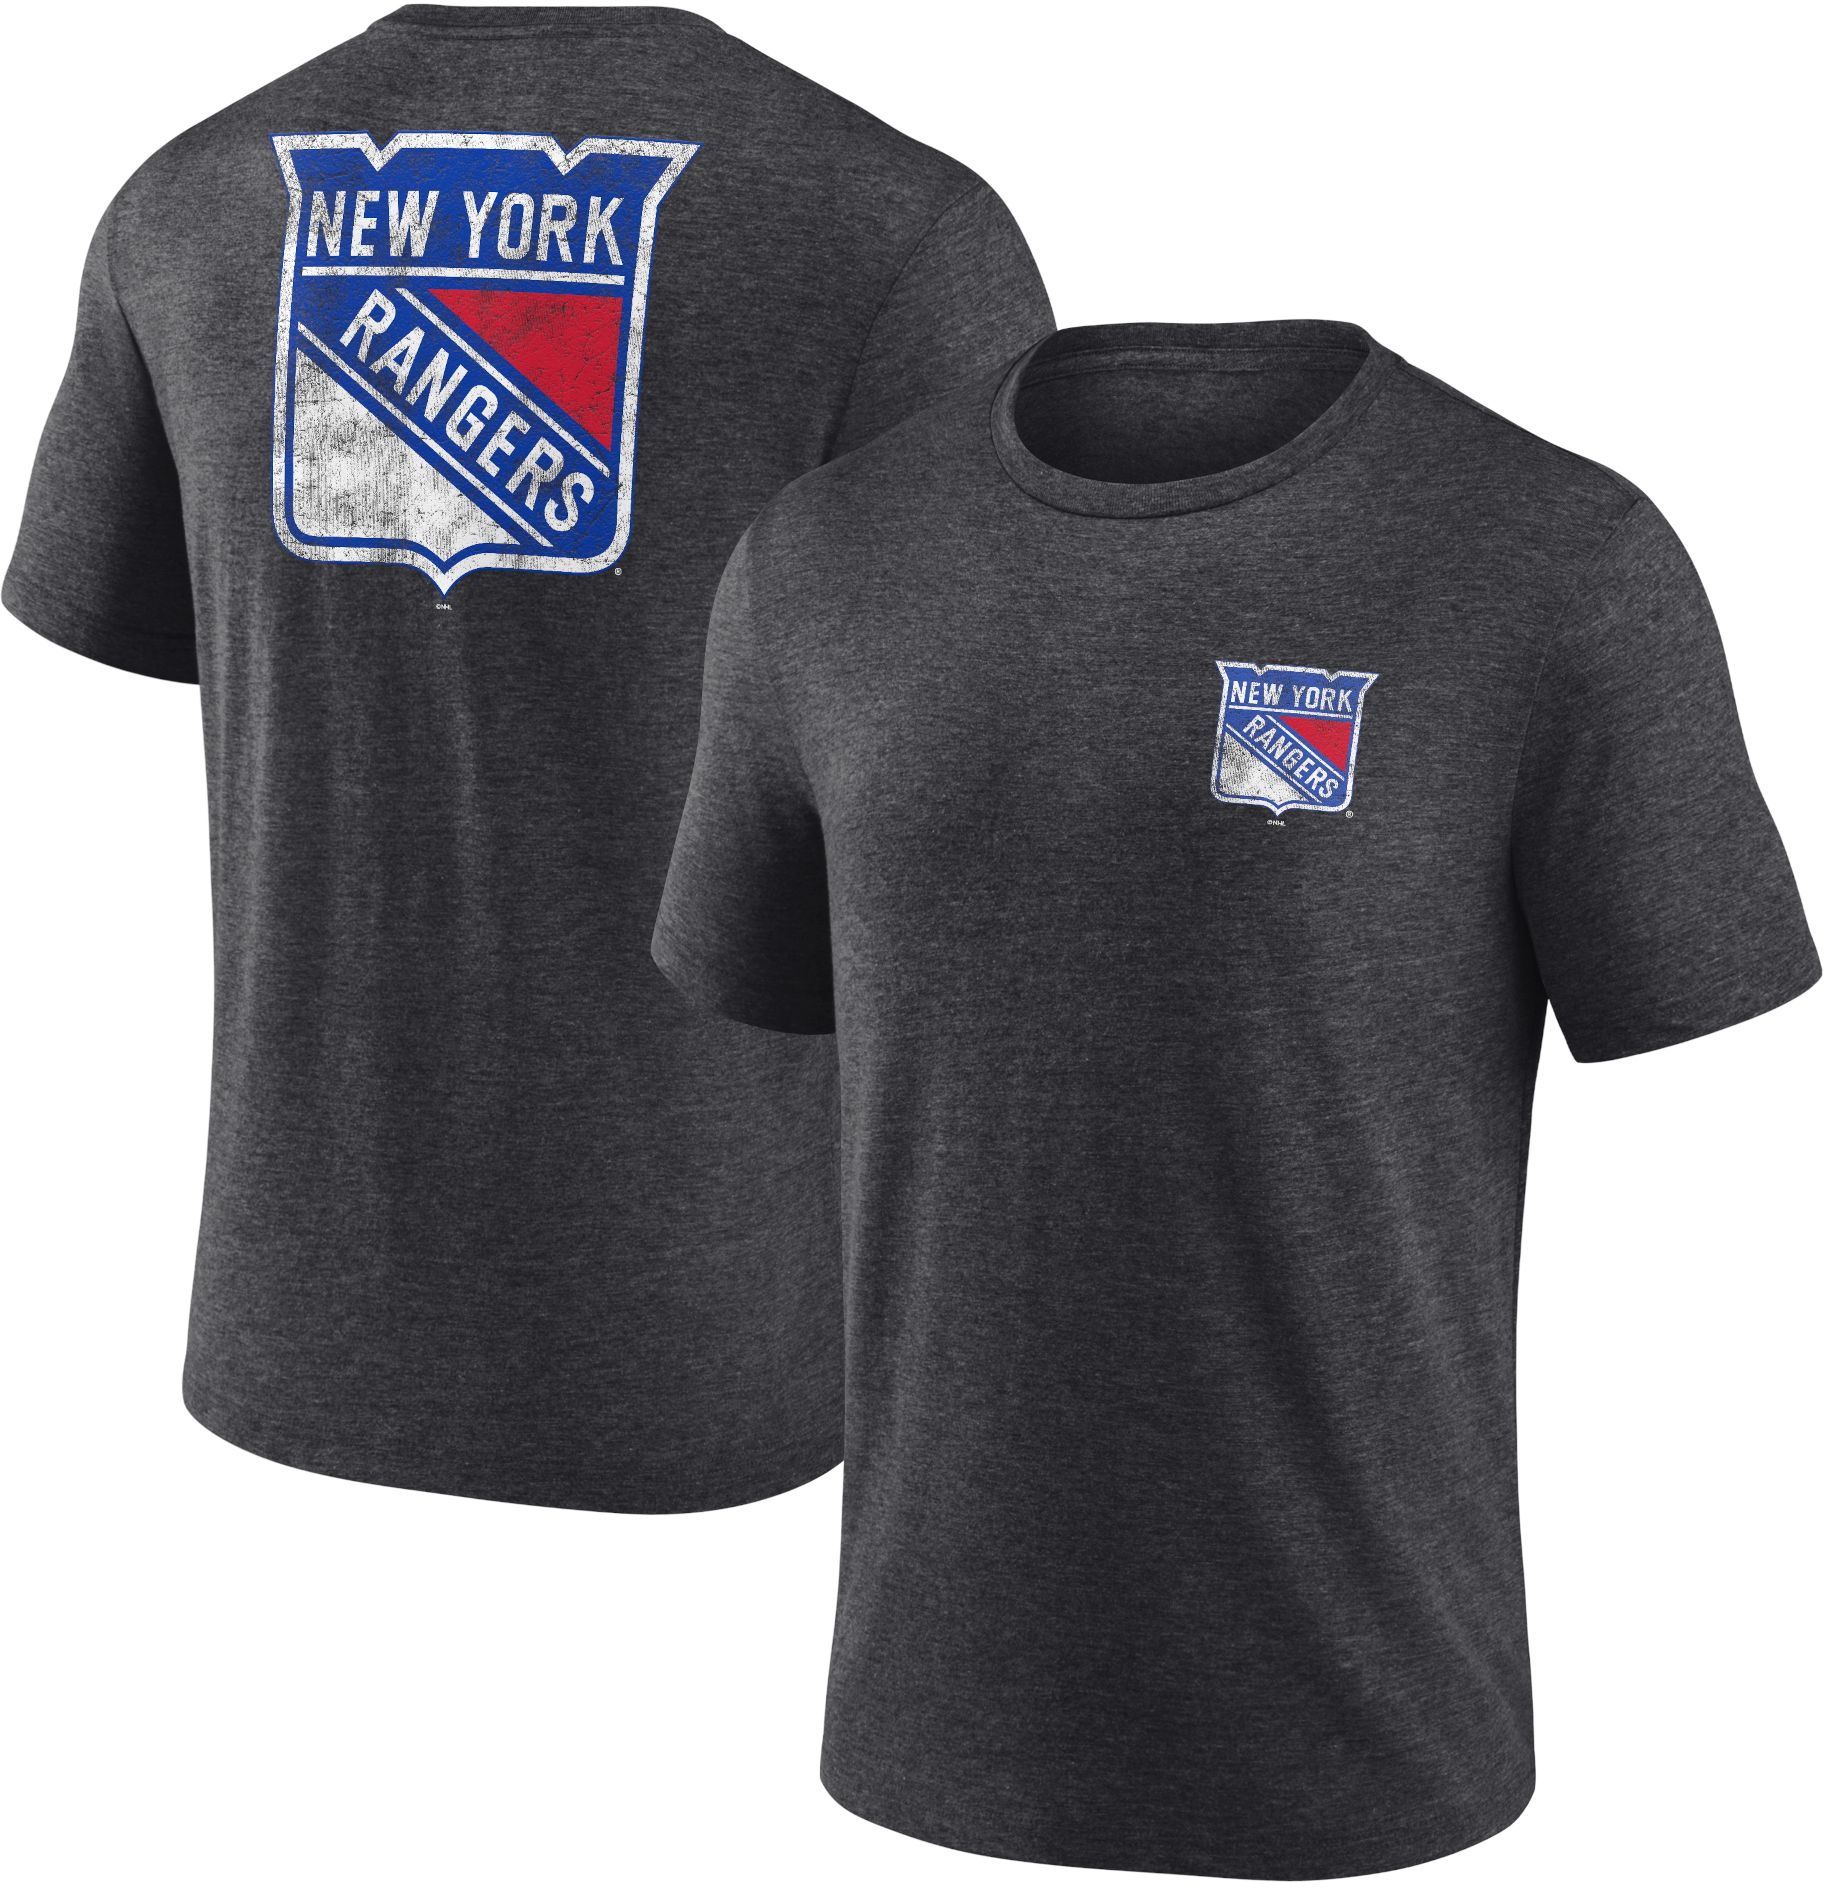 NHL New York Rangers Adam Fox #23 Royal T-Shirt